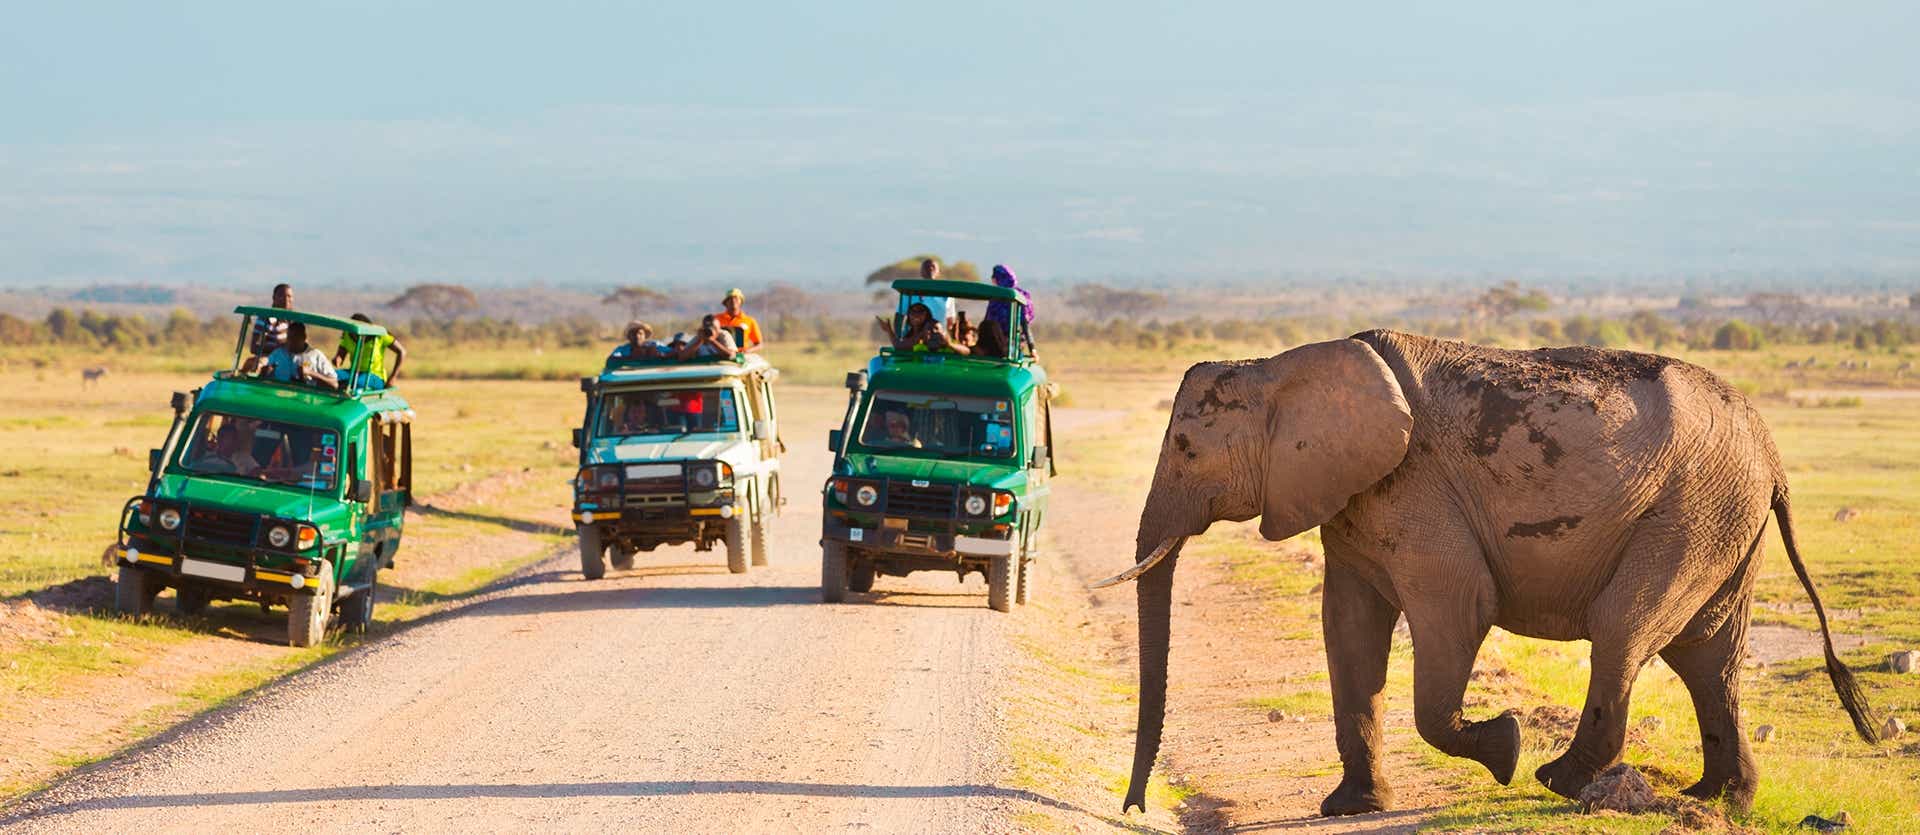 Elephant sighting on safari <span class="iconos separador"></span> Amboseli